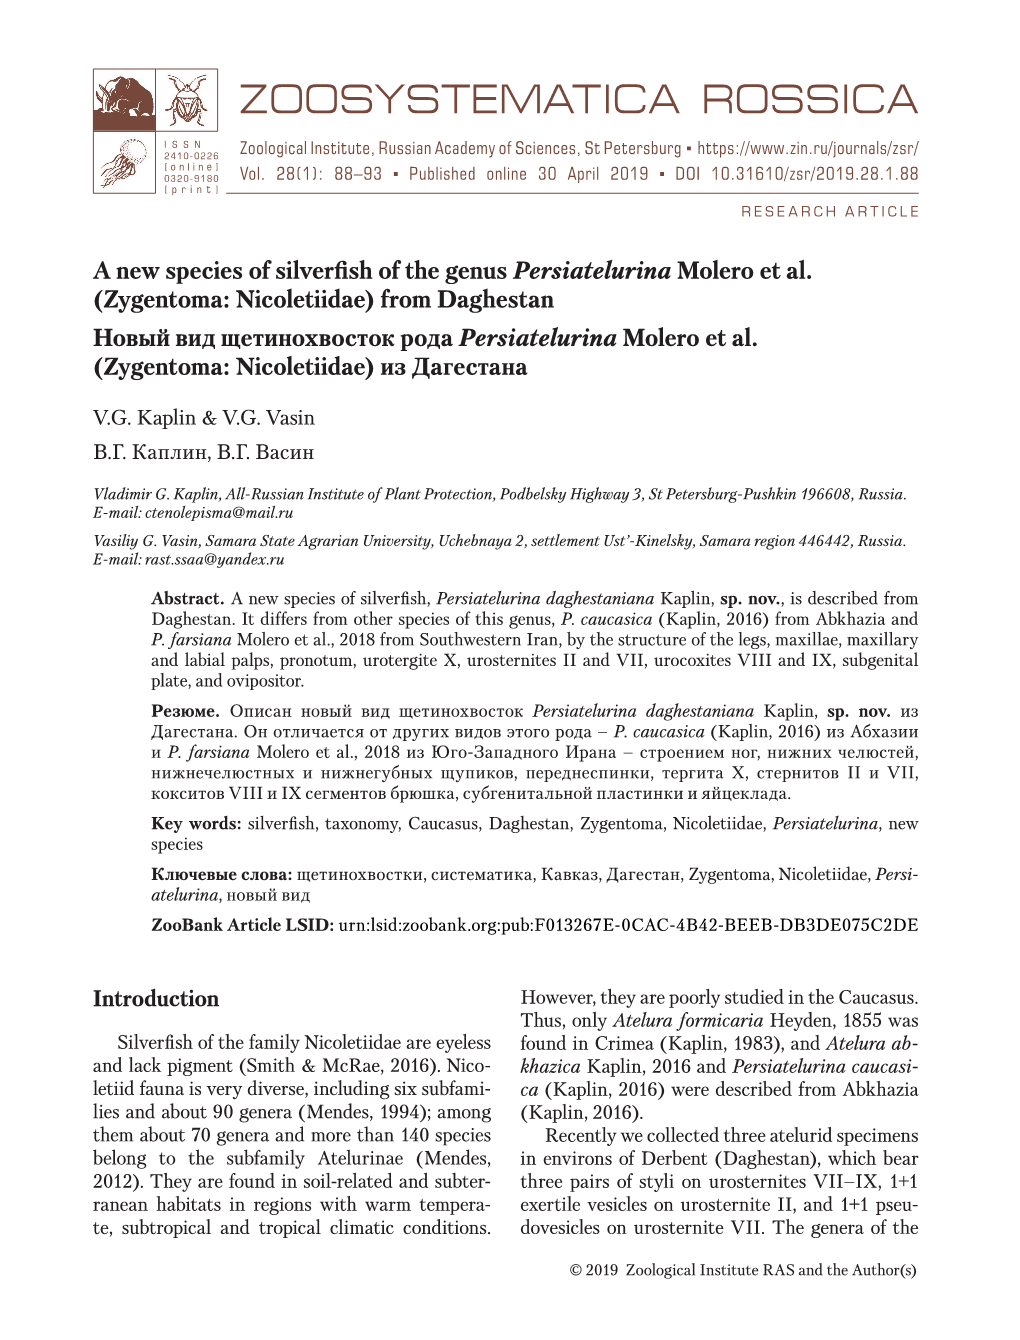 A New Species of Silverfish of the Genus Persiatelurina Molero Et Al. (Zygentoma: Nicoletiidae) from Daghestan